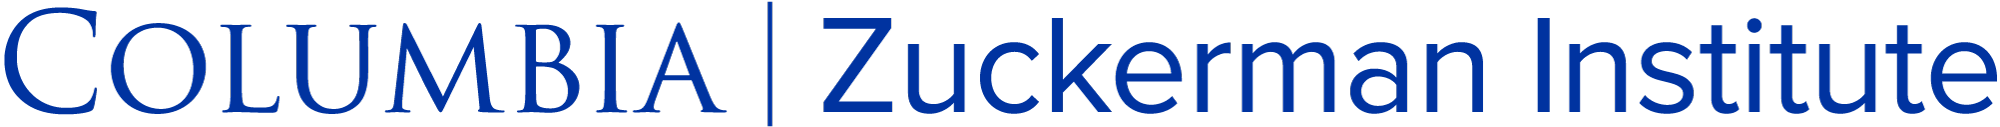 zuckerman-logo-clean.png